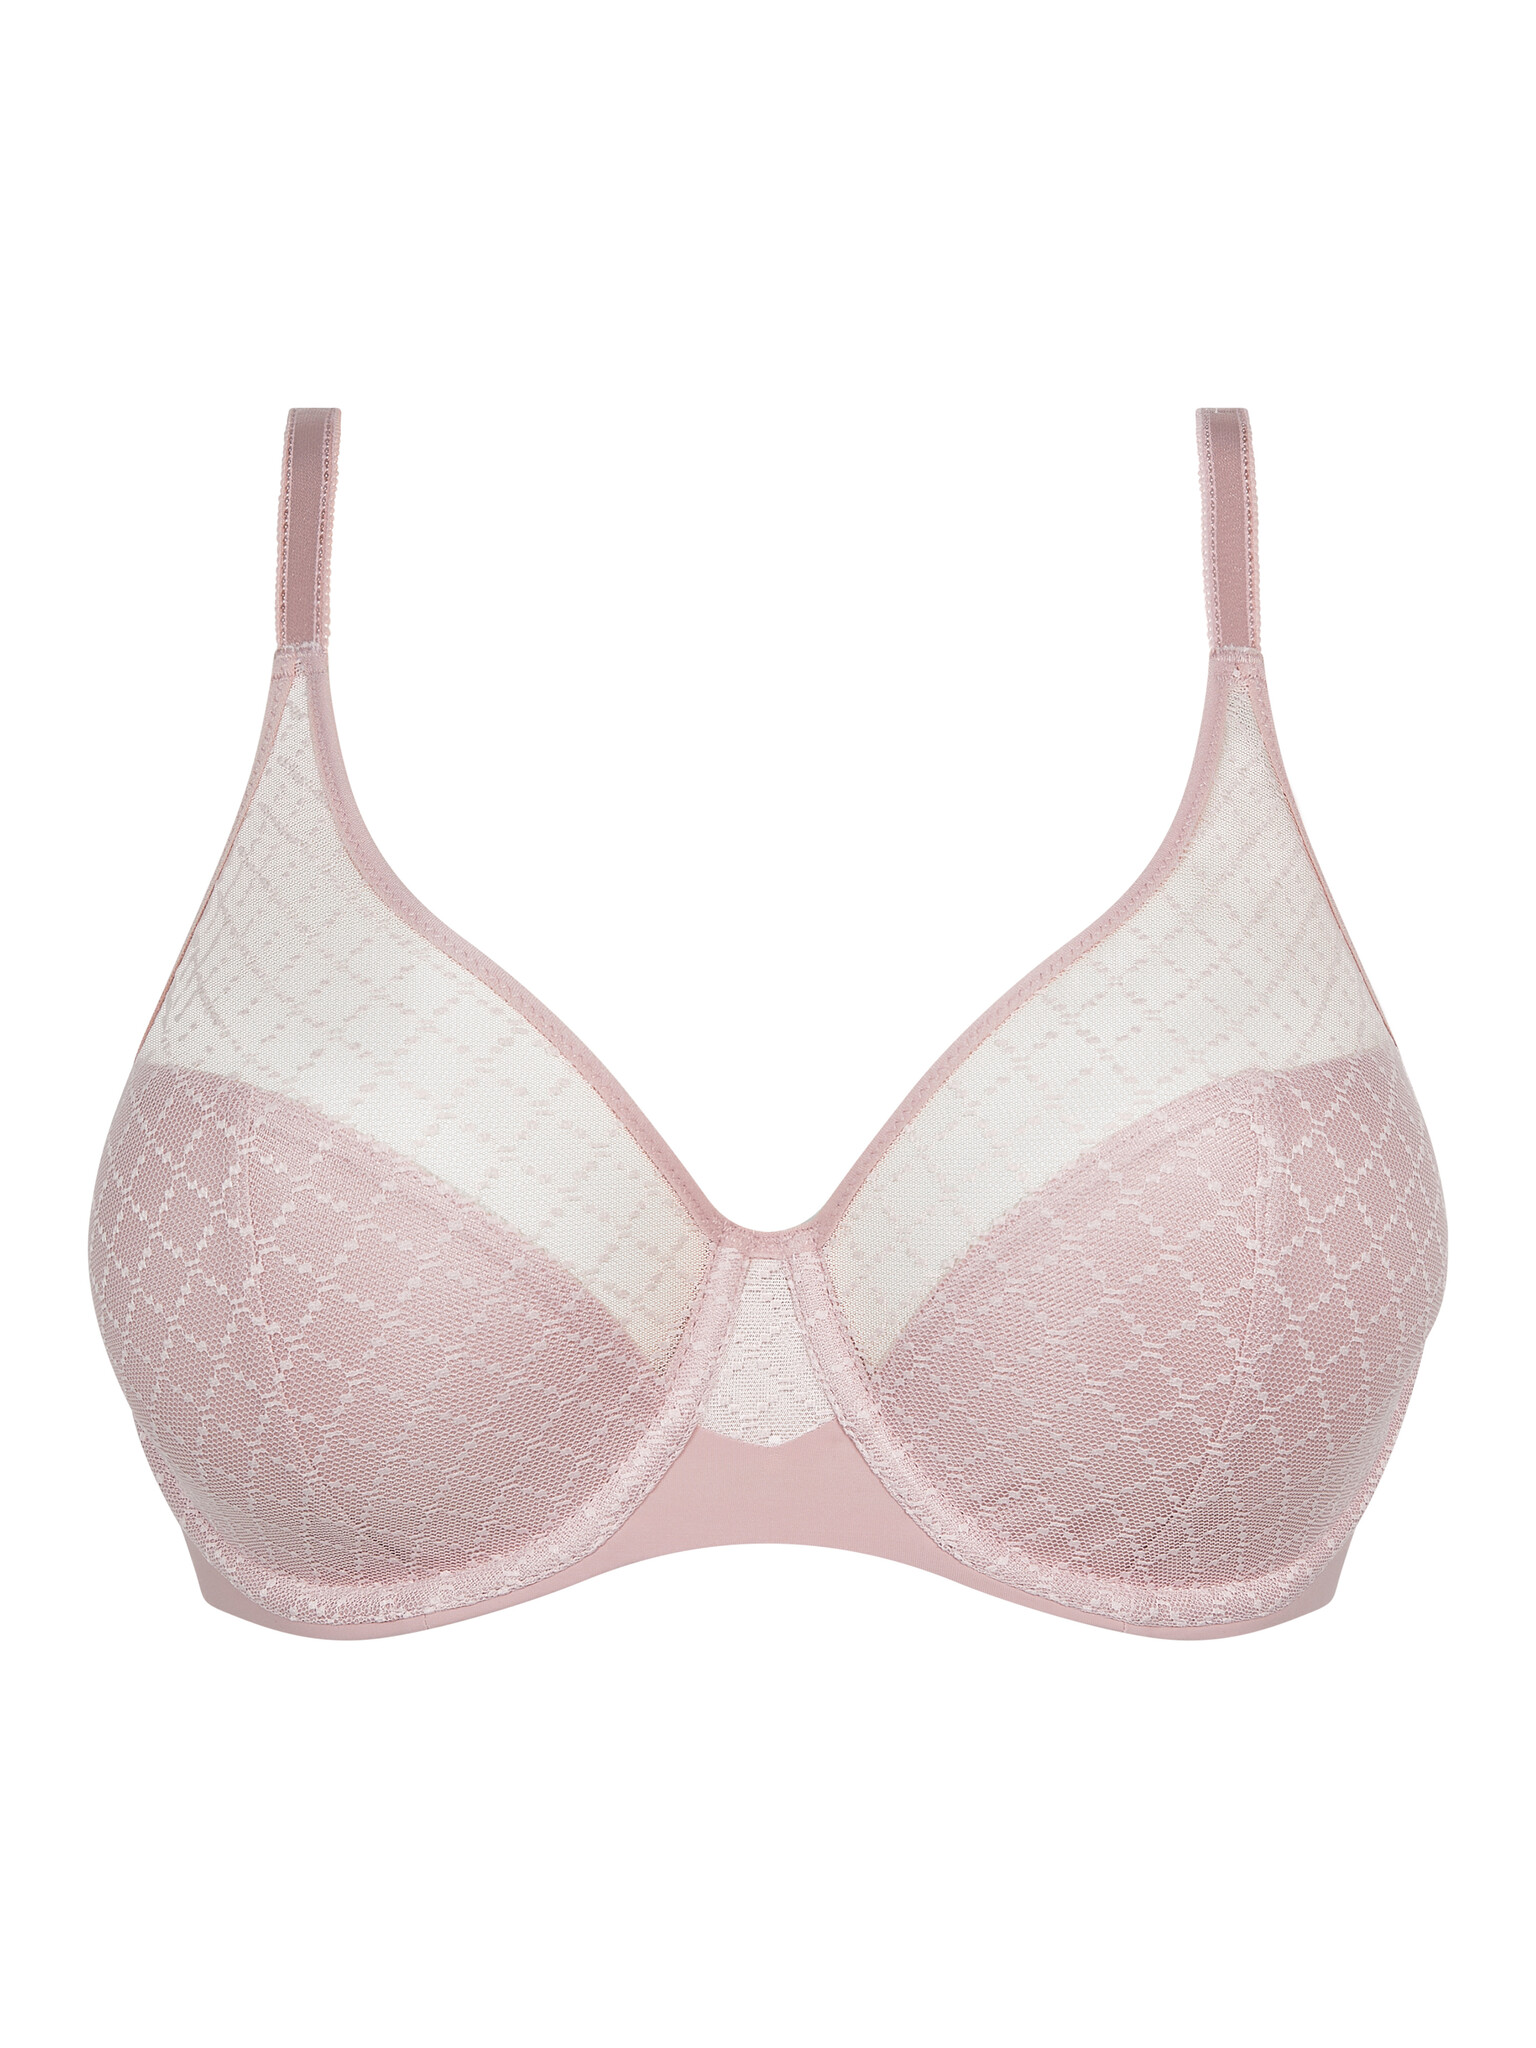 Chantelle • Chantelle EasyFeel Norah Chic wire bra, pink • Price EUR 68